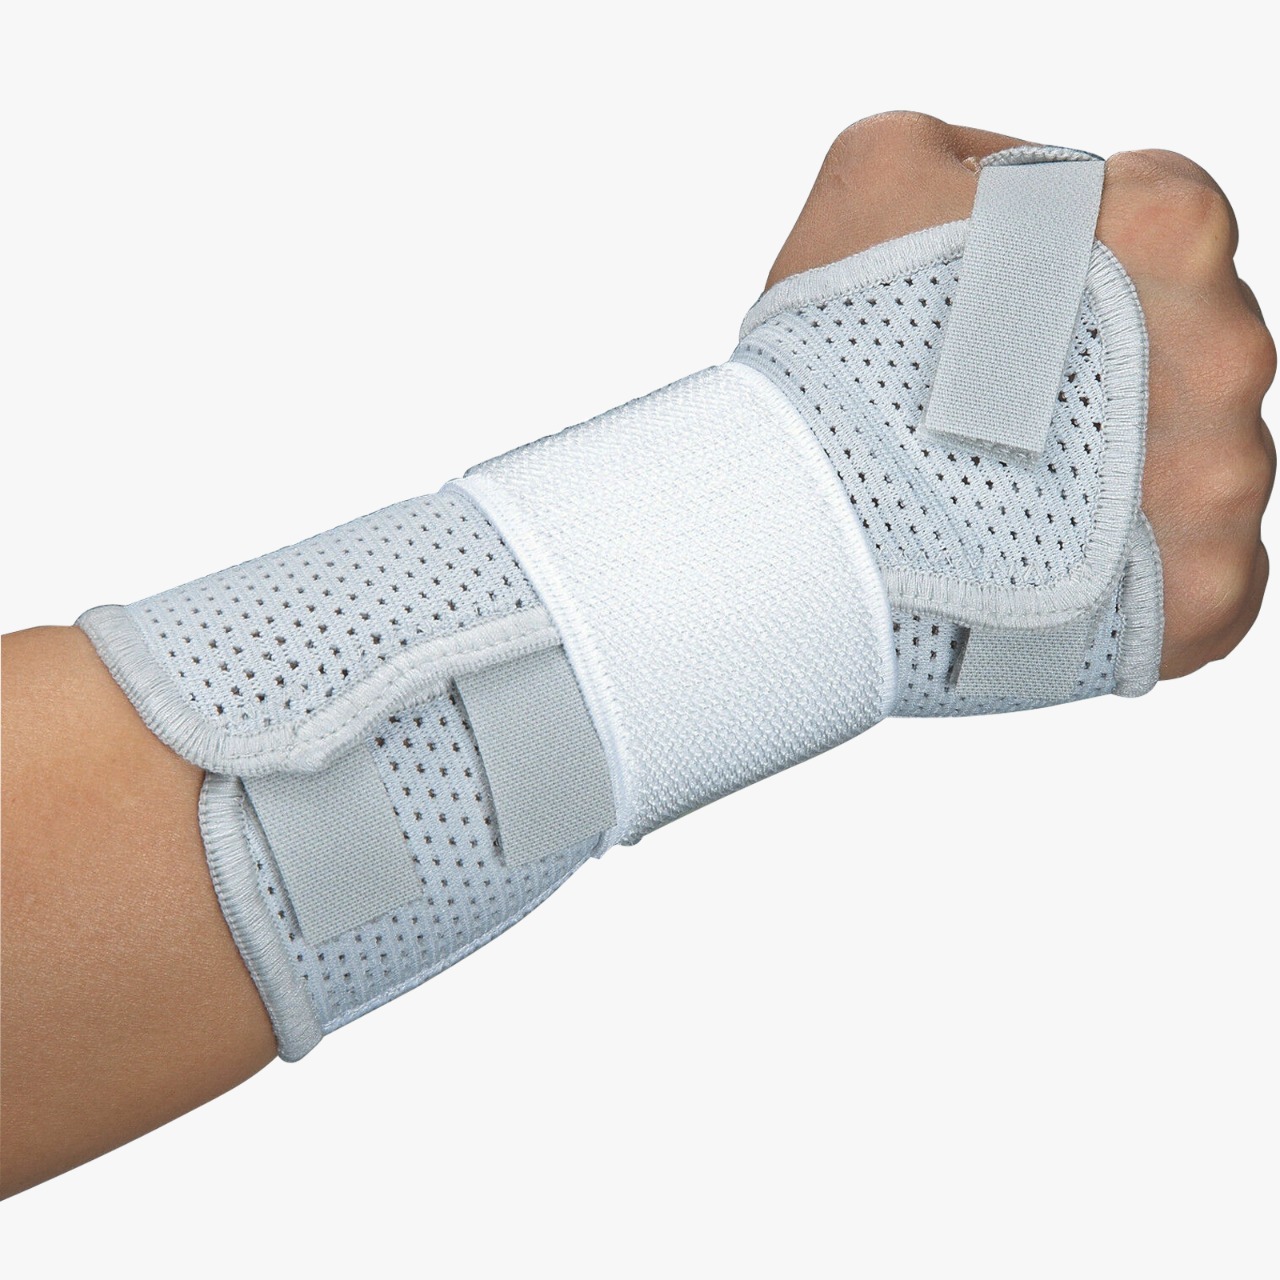 Small Left Hand Breathable Wrist Support Brace Splint For Carpal Tunnel, Arthritis Sprain Strain